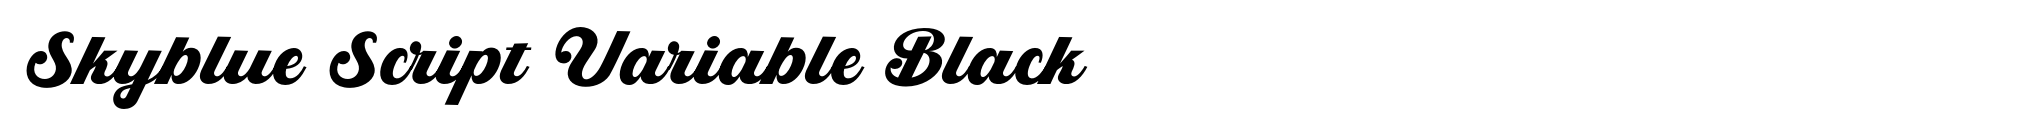 Skyblue Script Variable Black image